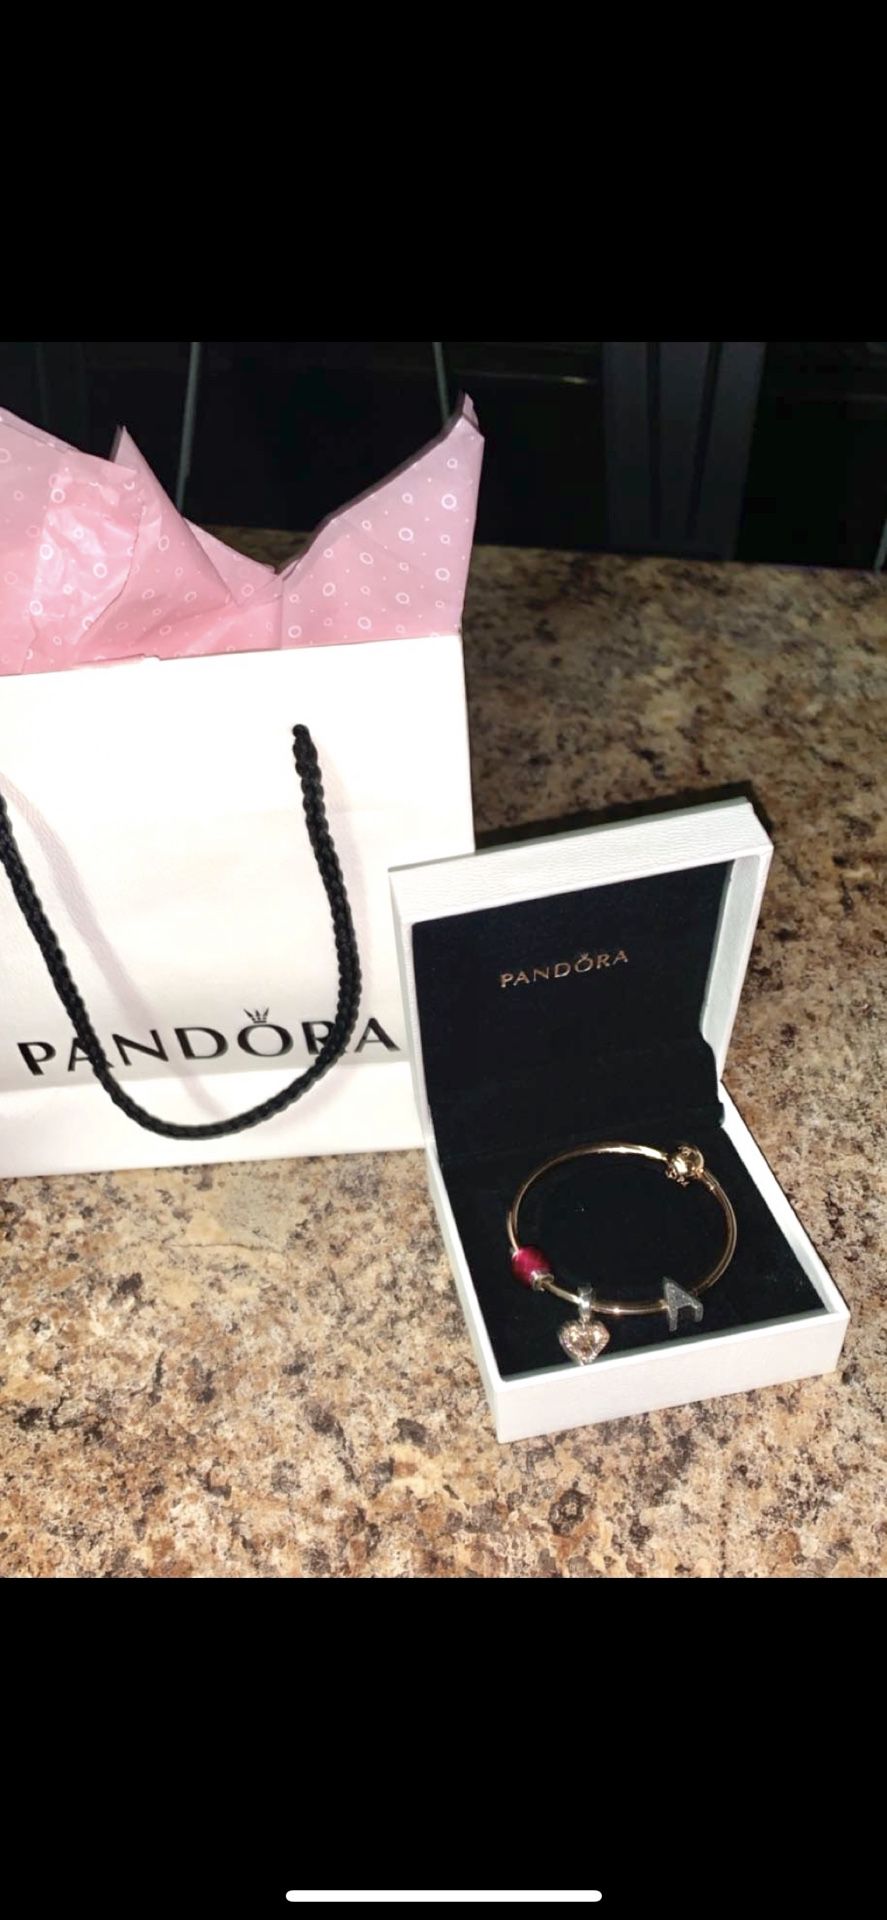 Pandora Charm Bracelet With Charms 